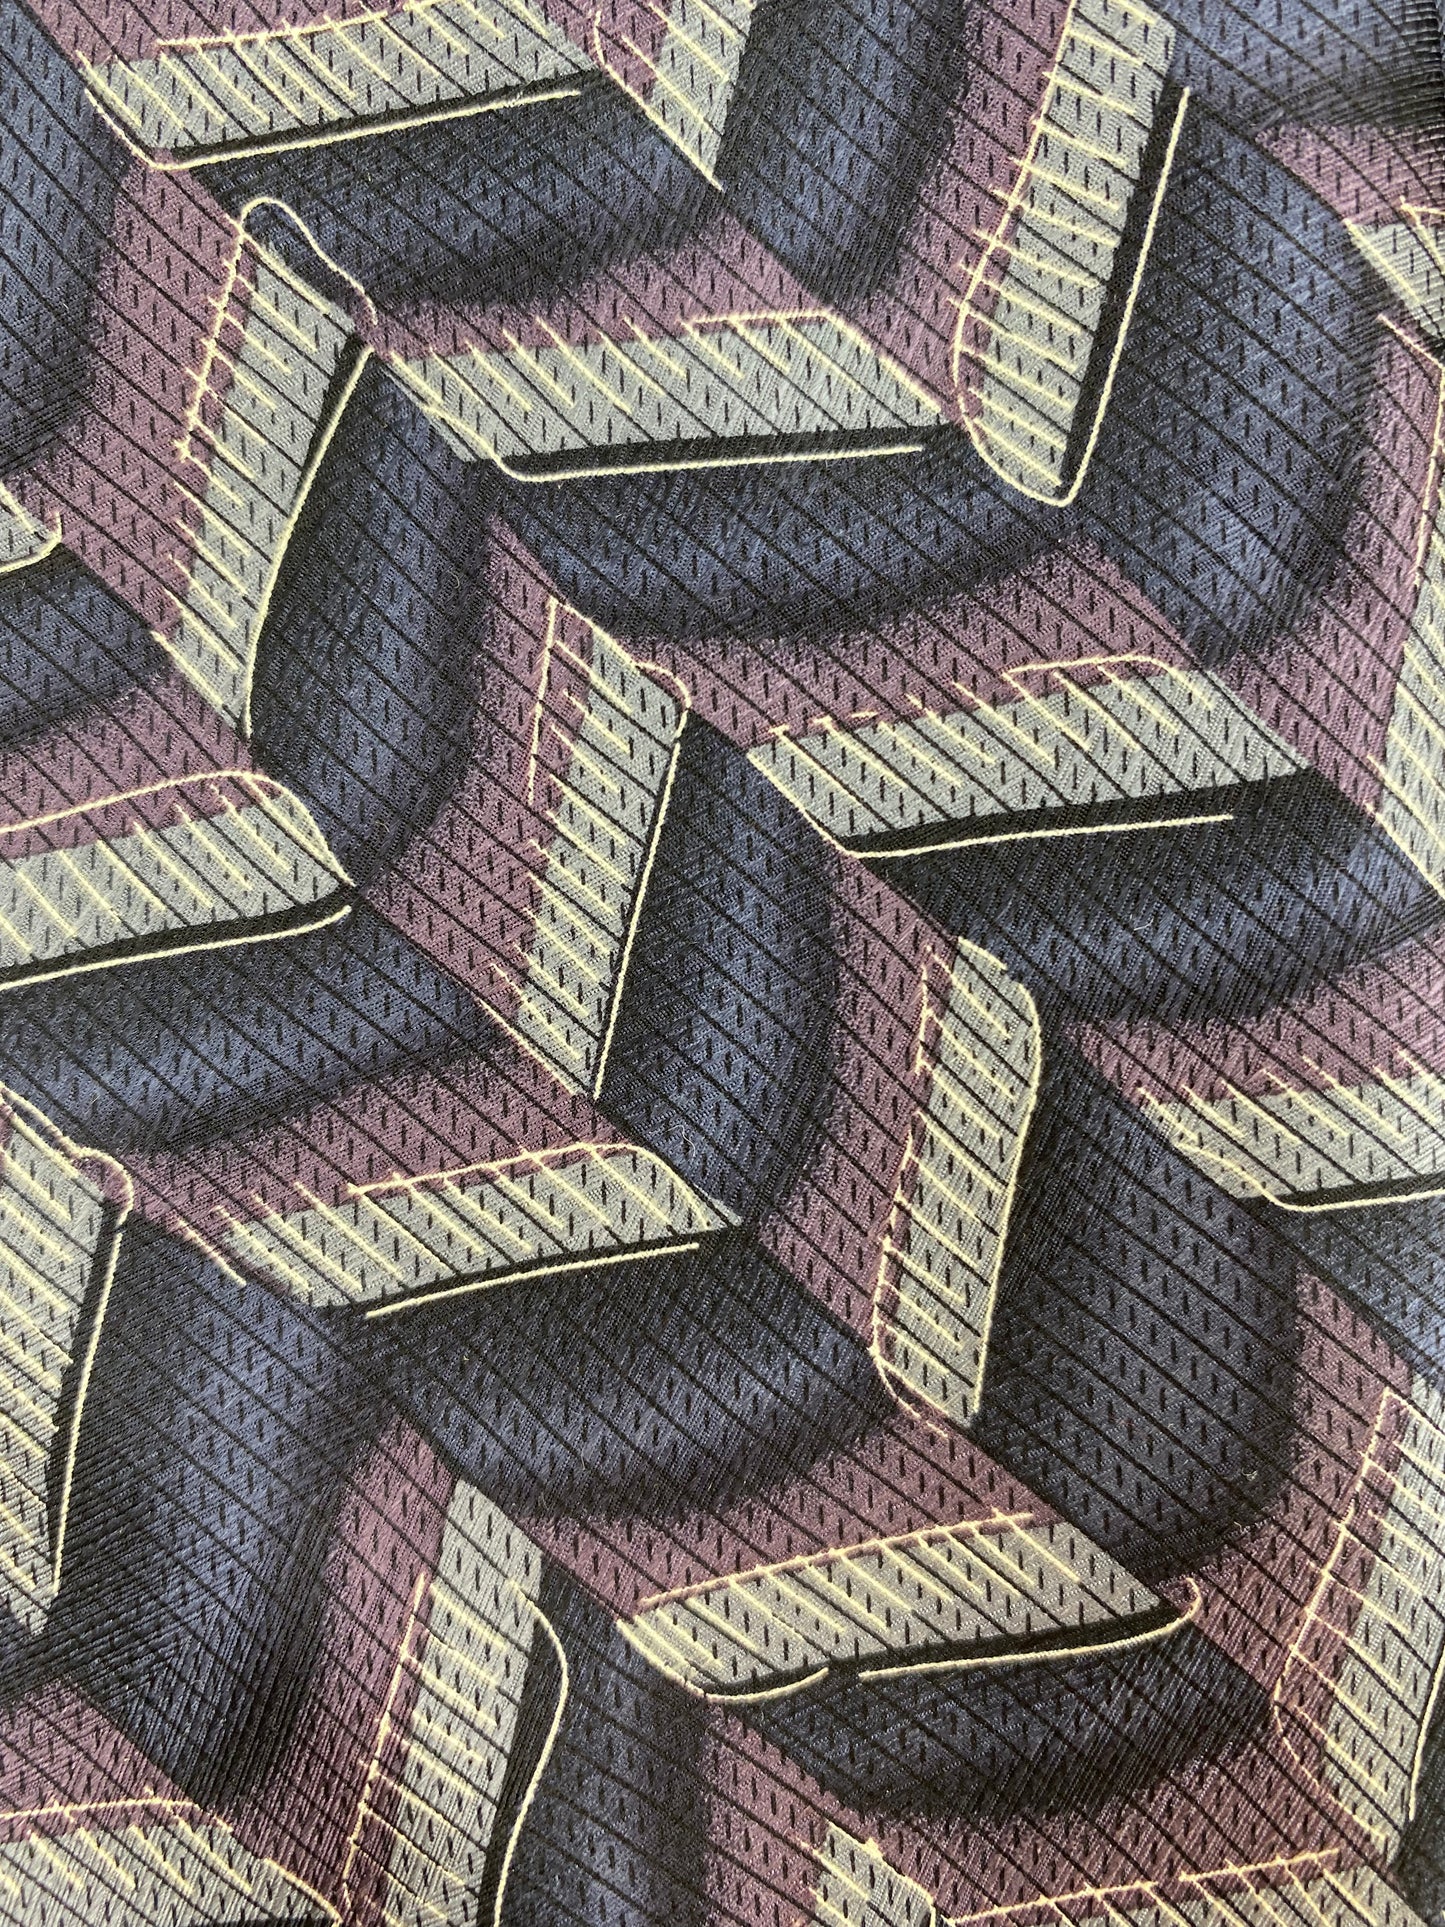 90s Deadstock Silk Necktie, Men's Vintage Purple/ Grey Abstract Pattern Tie, NOS